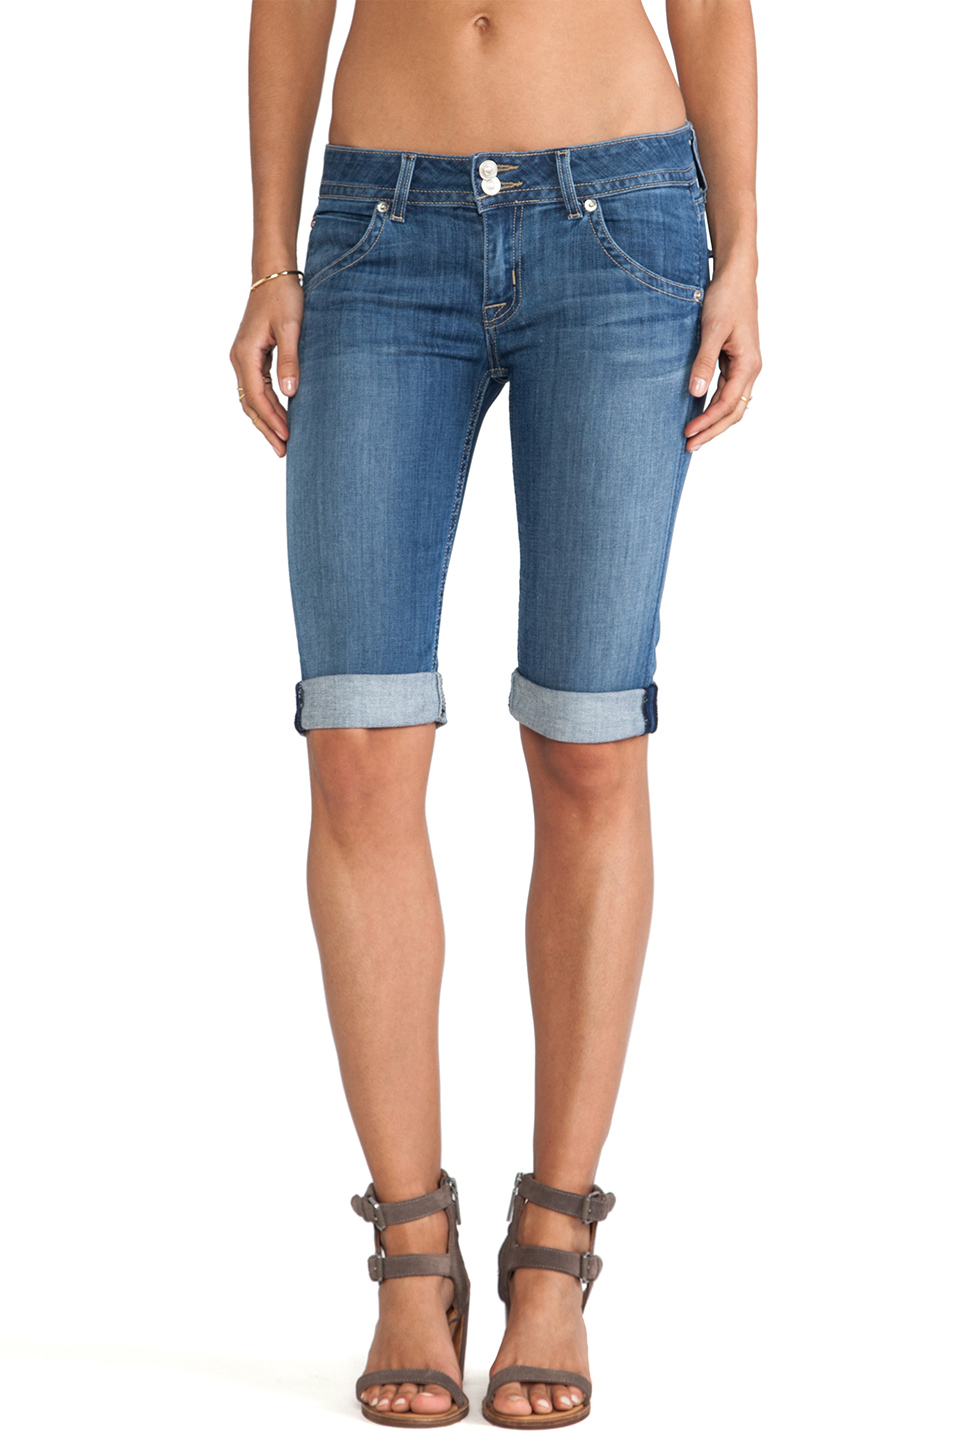 Lyst - Hudson Jeans Palerme Knee Short in Blue